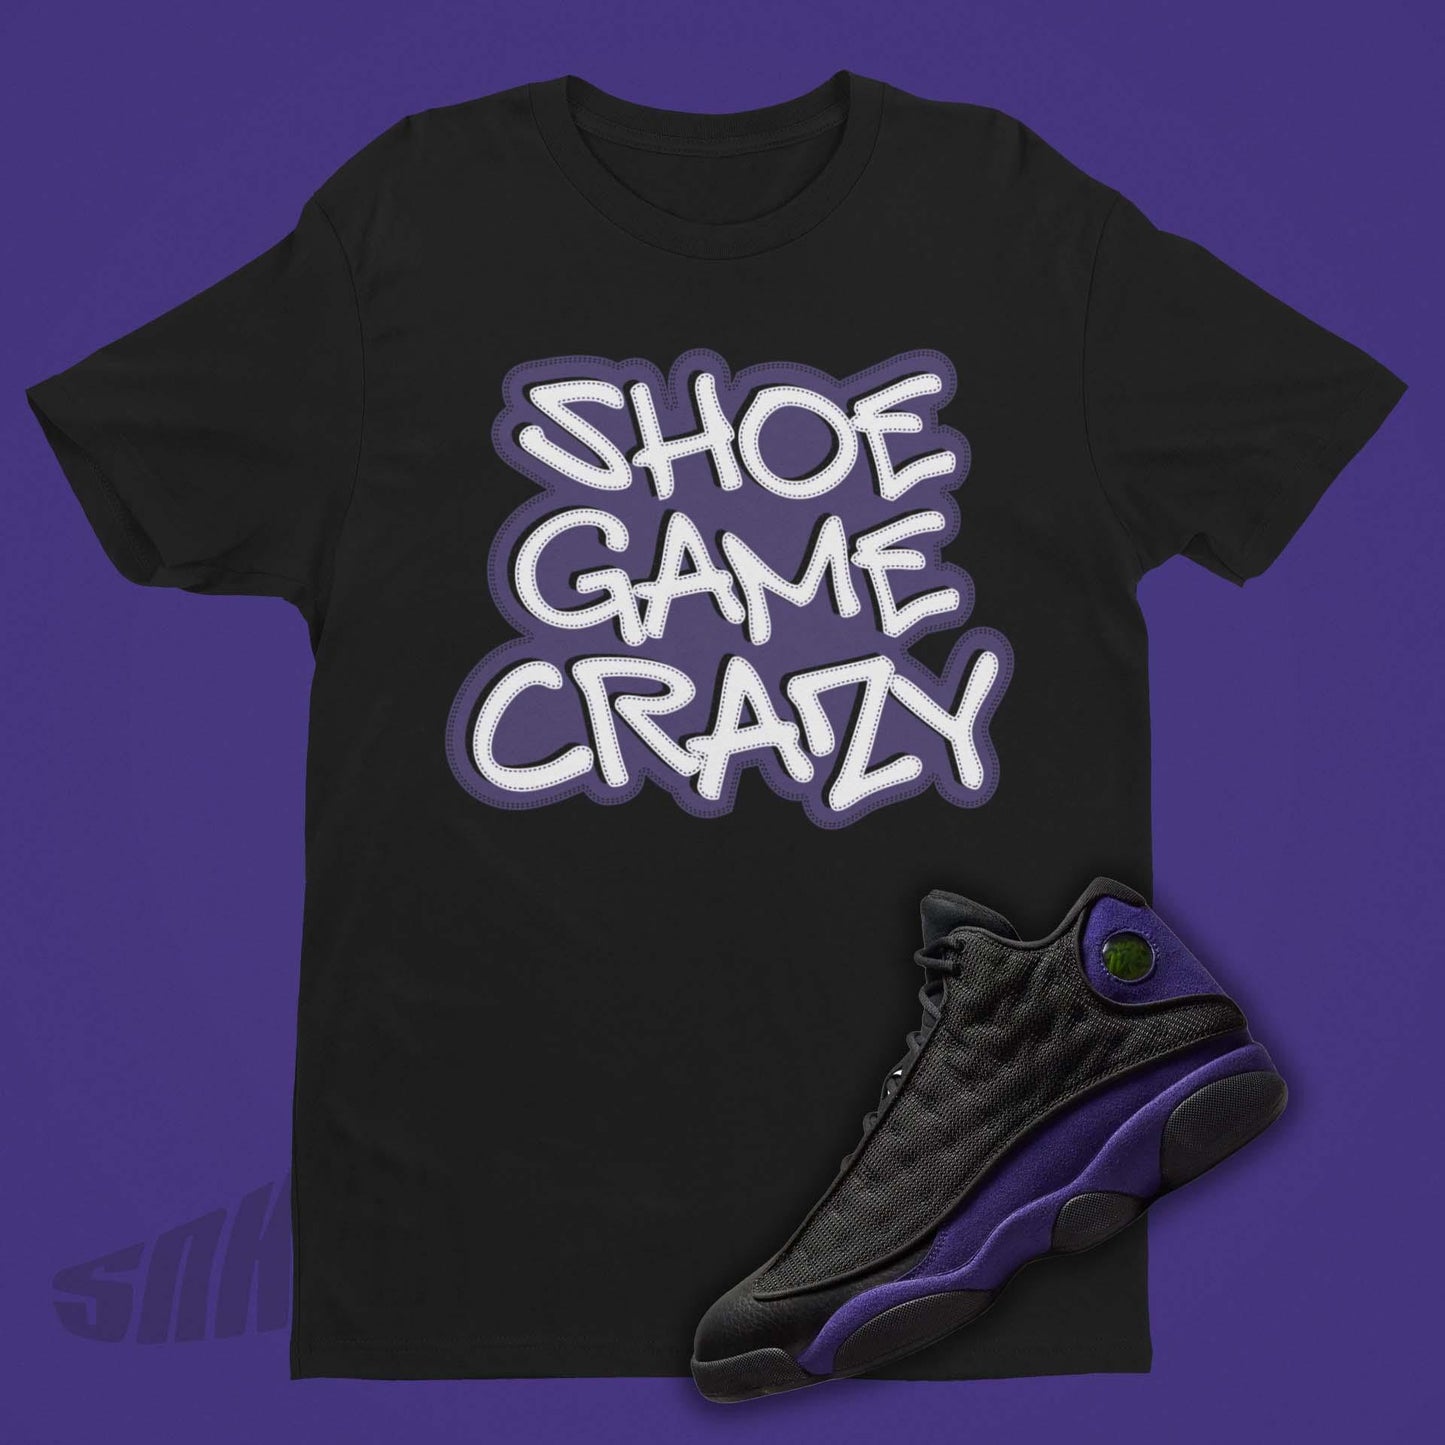 Shoe Game Crazy Shirt To Match Air Jordan 13 Court Purple